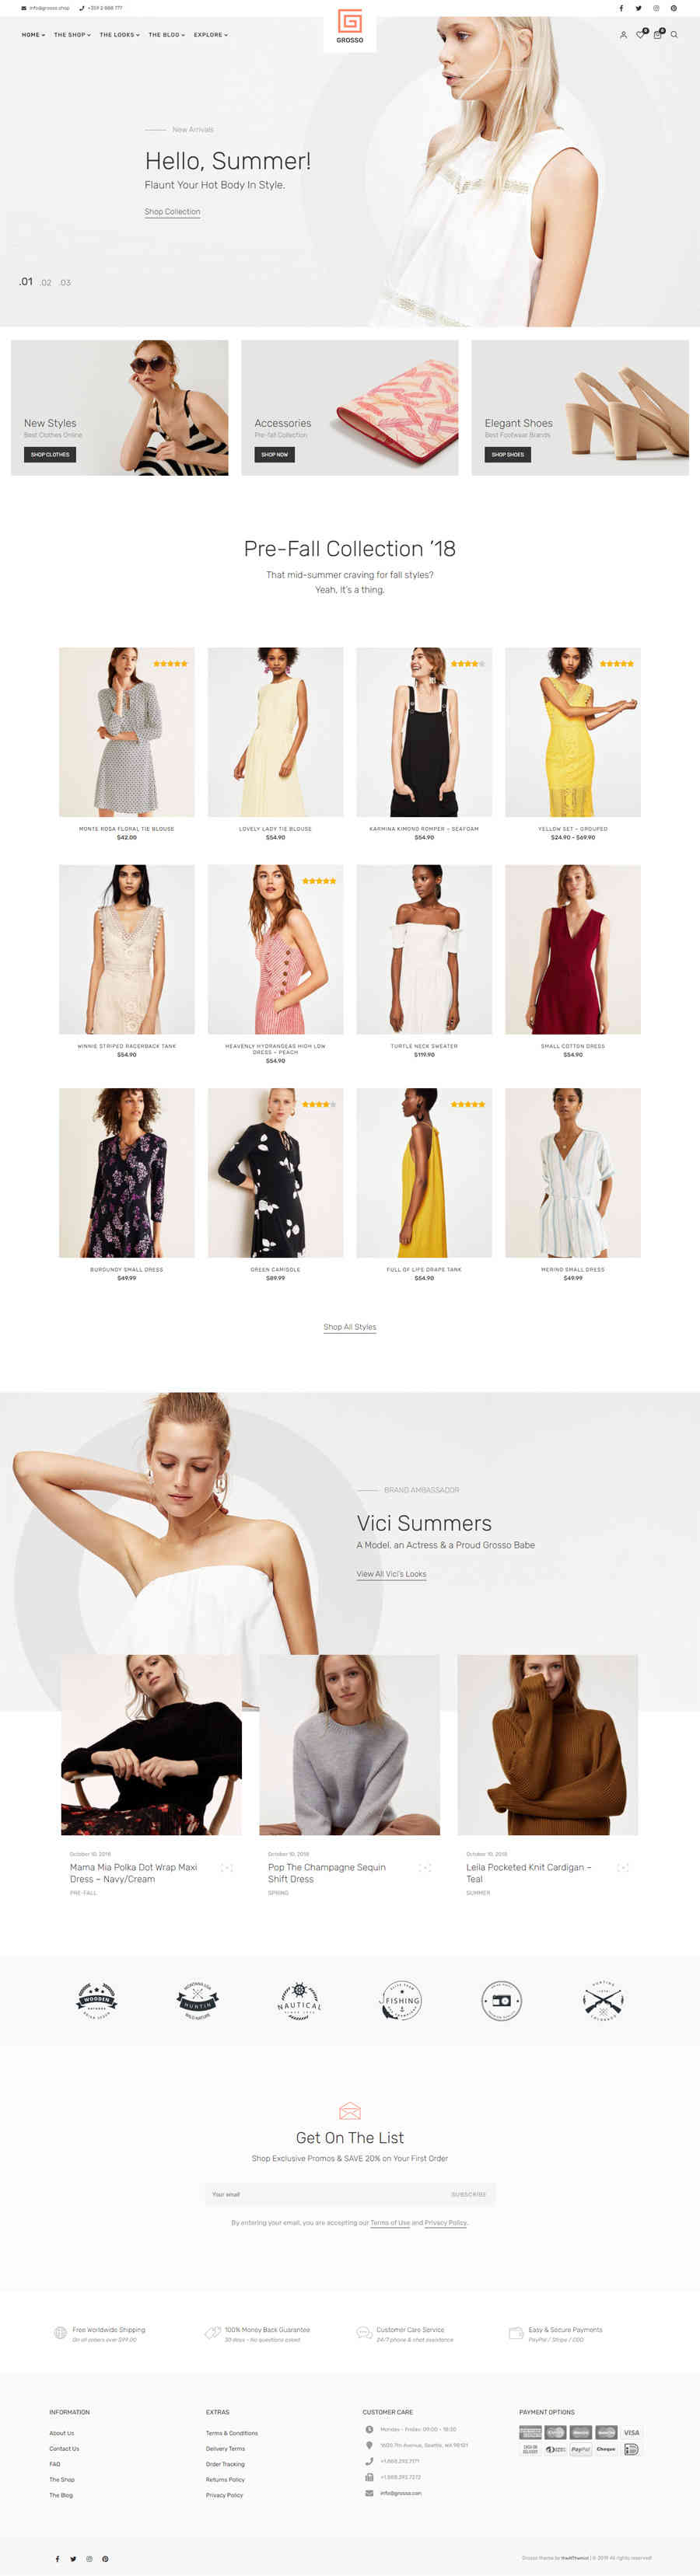 thiet ke website tmi fashion shop 4045